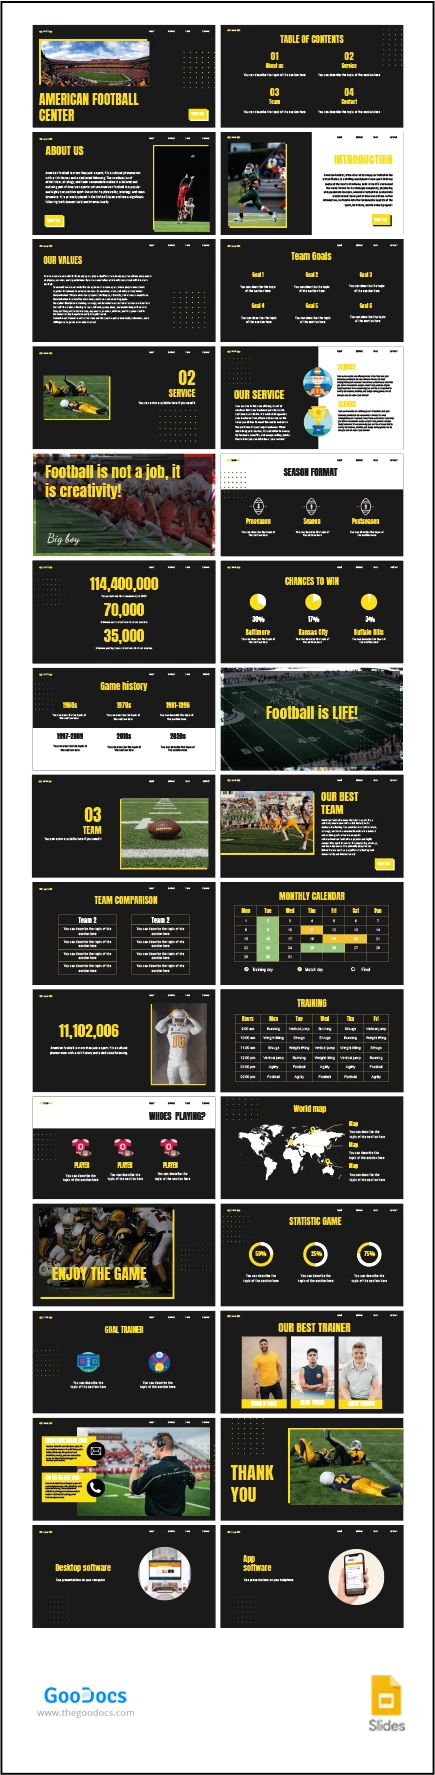 American Football Center - free Google Docs Template - 10067360